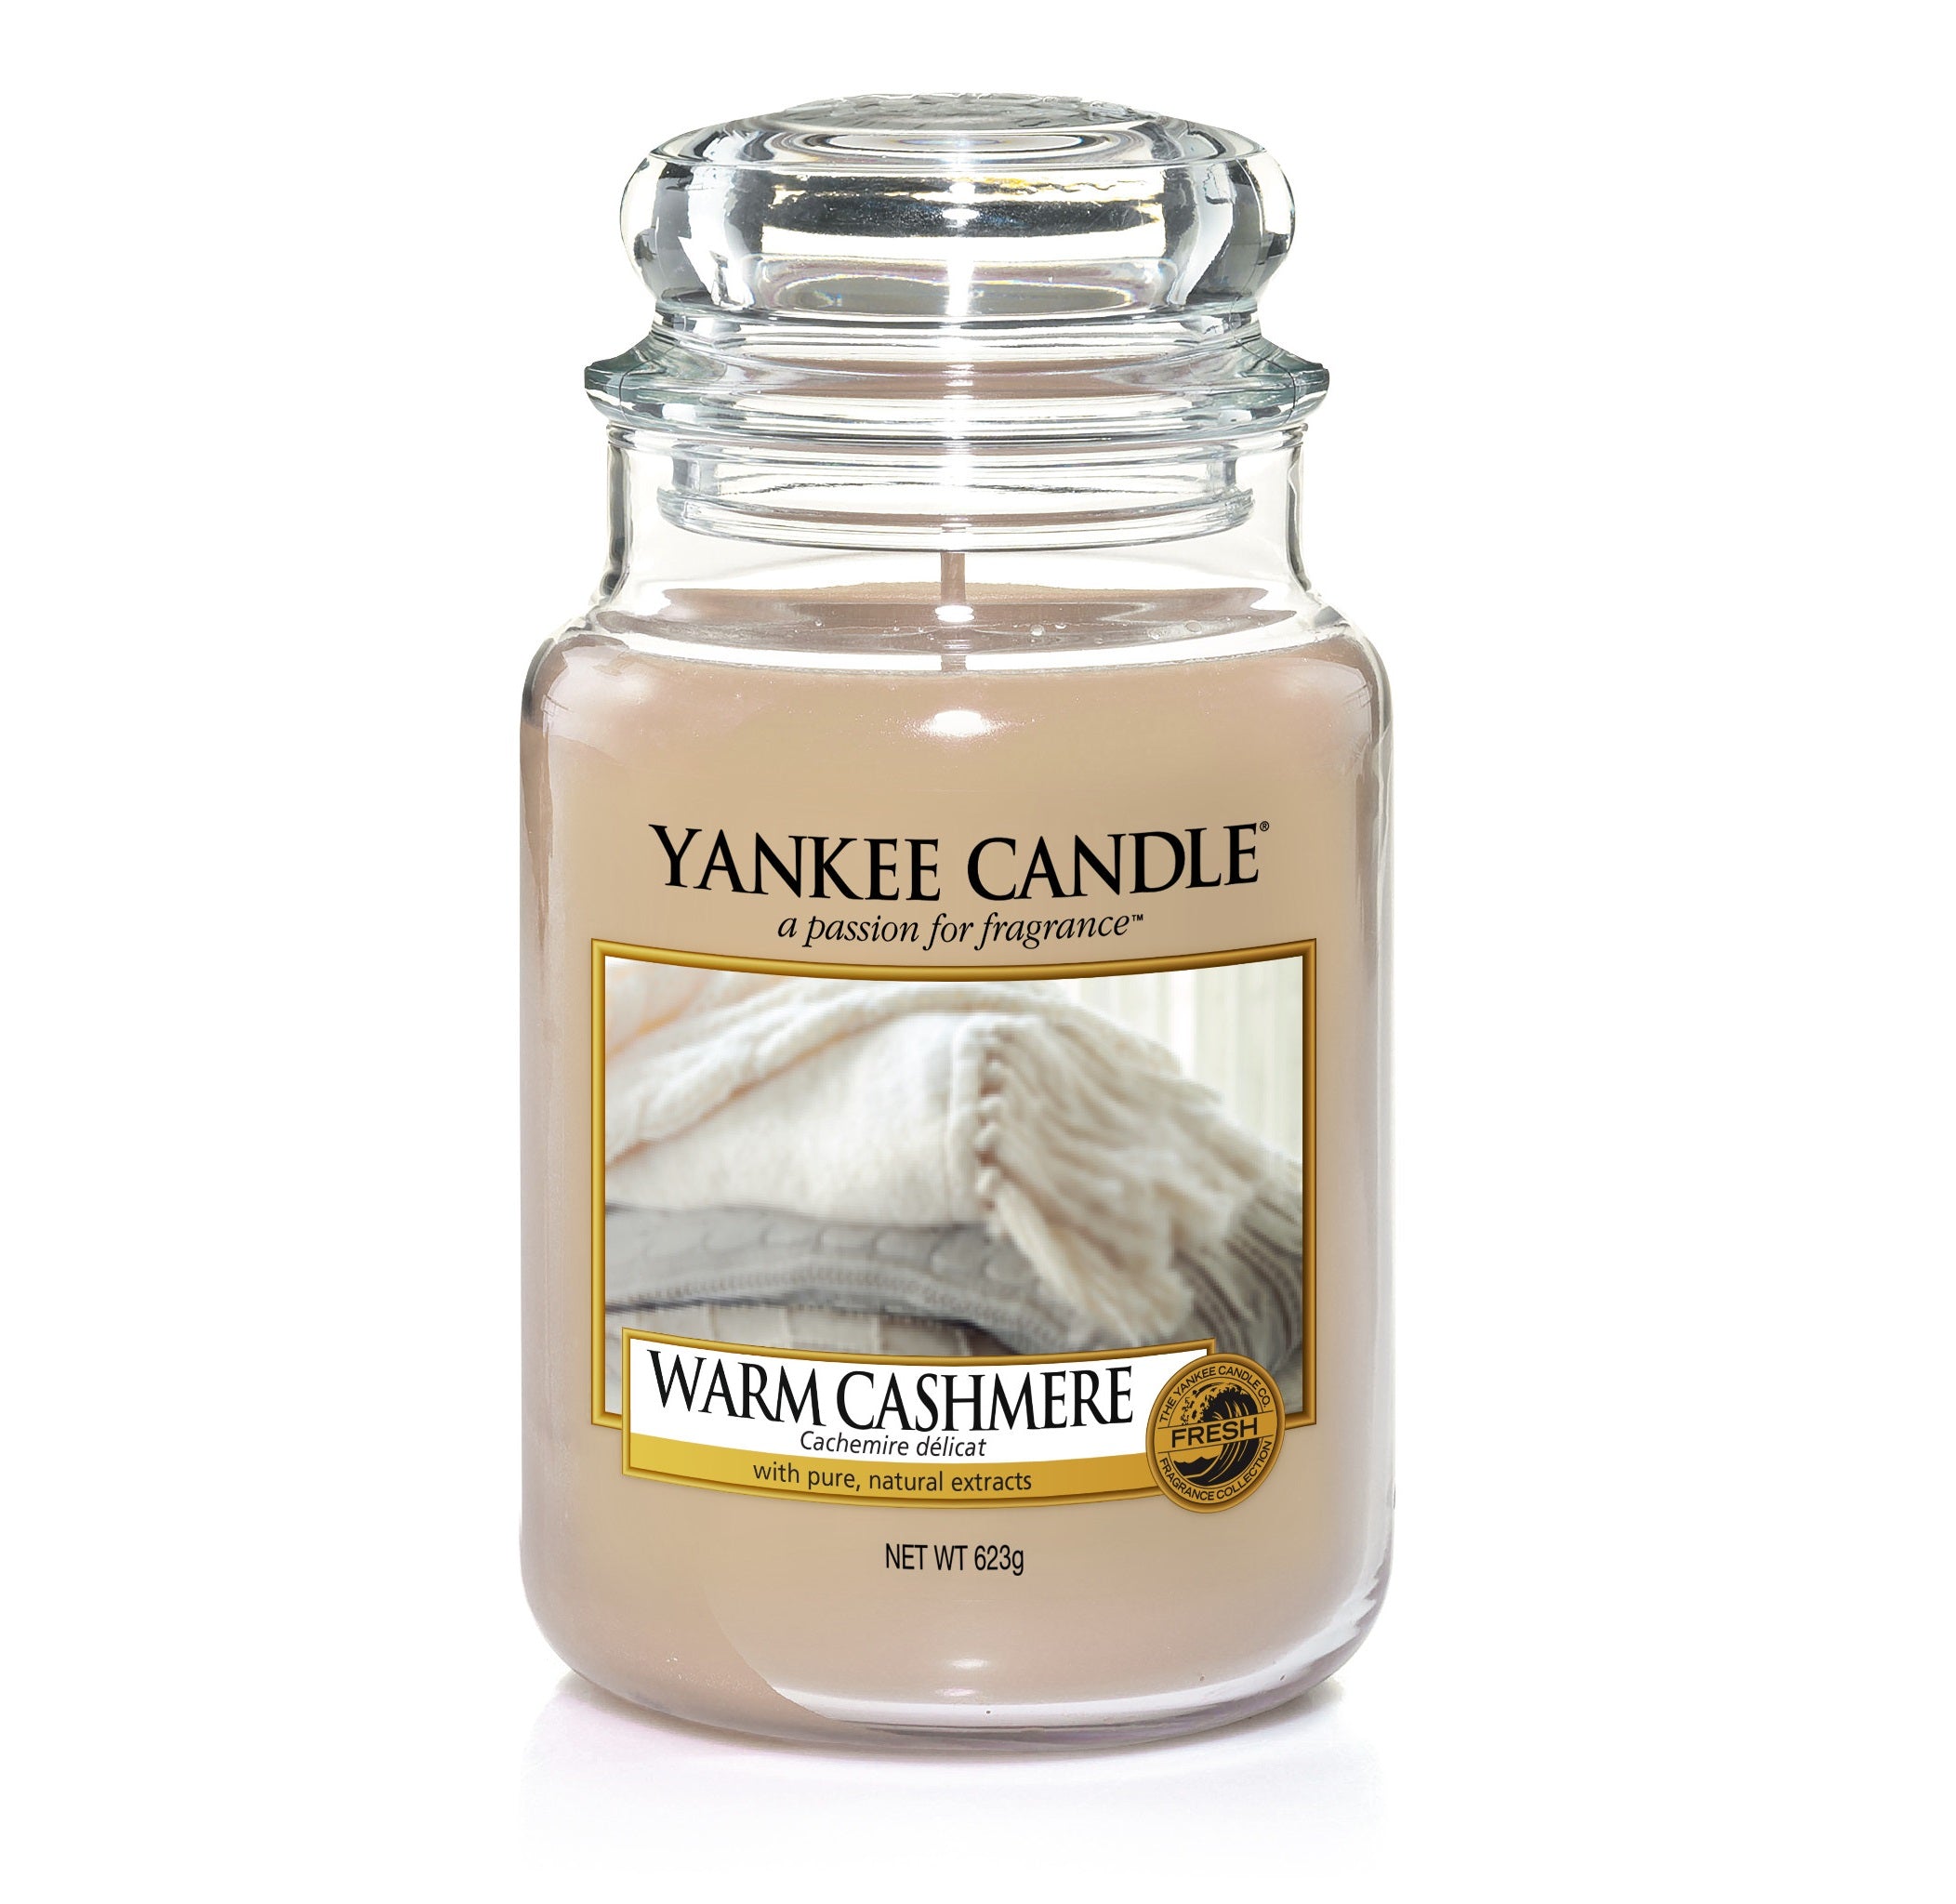 WARM CASHMERE -Yankee Candle- Giara Grande